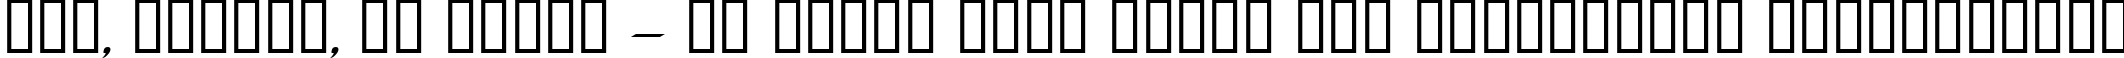 Пример написания шрифтом Dumbledor 3 Italic текста на украинском